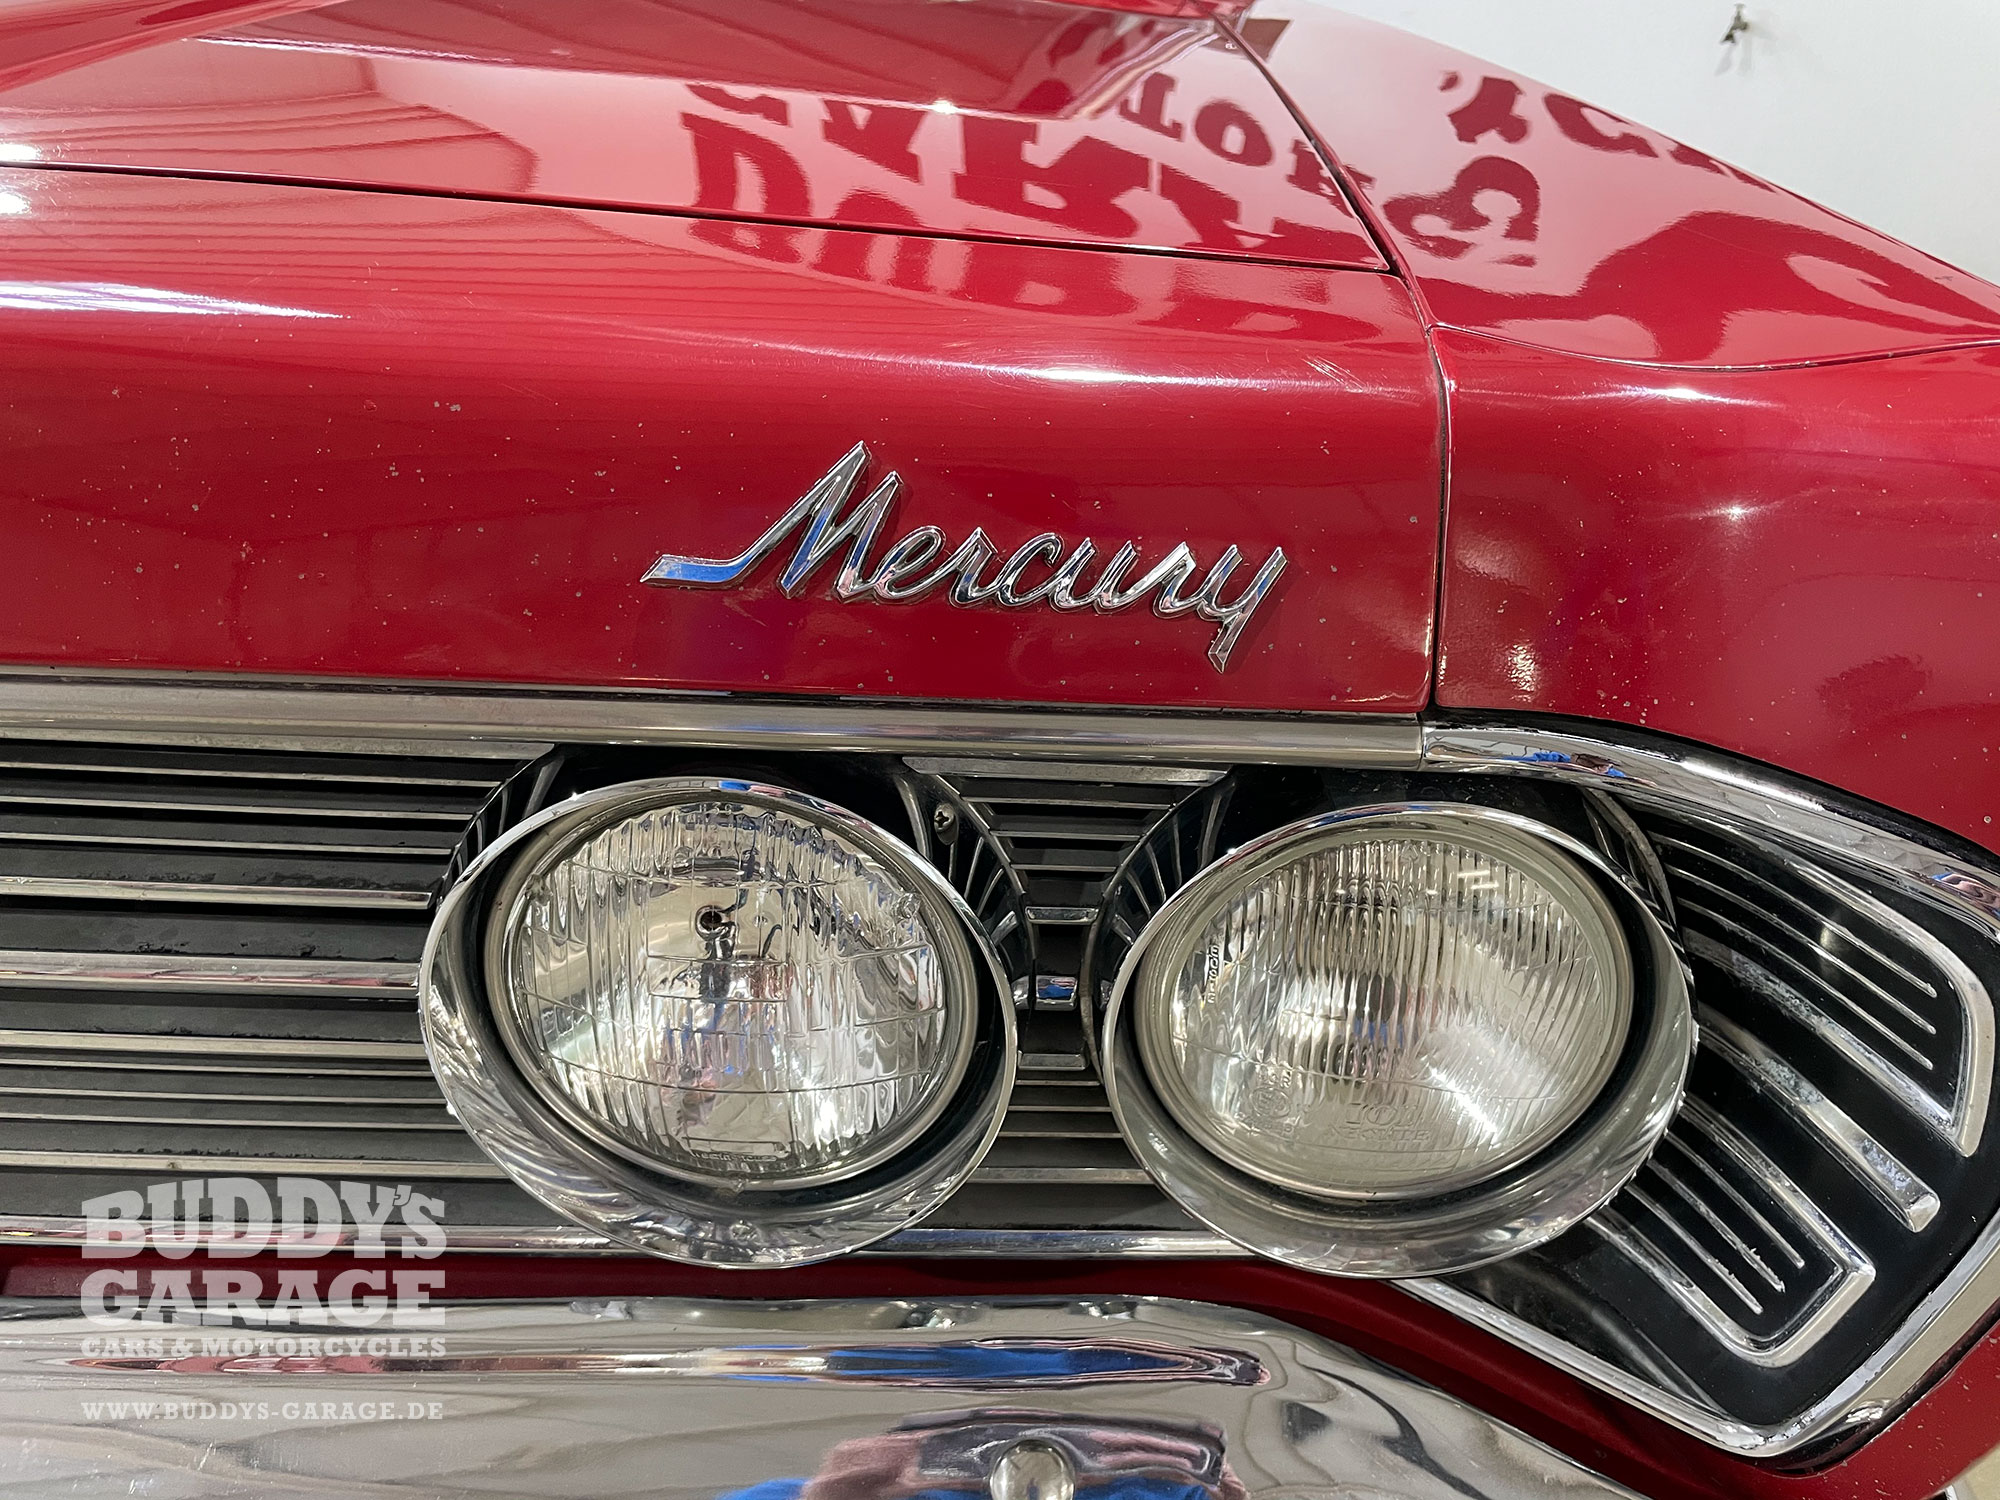 Mercury Monterey 1967 | Buddy's Garage Bad Oeynhausen